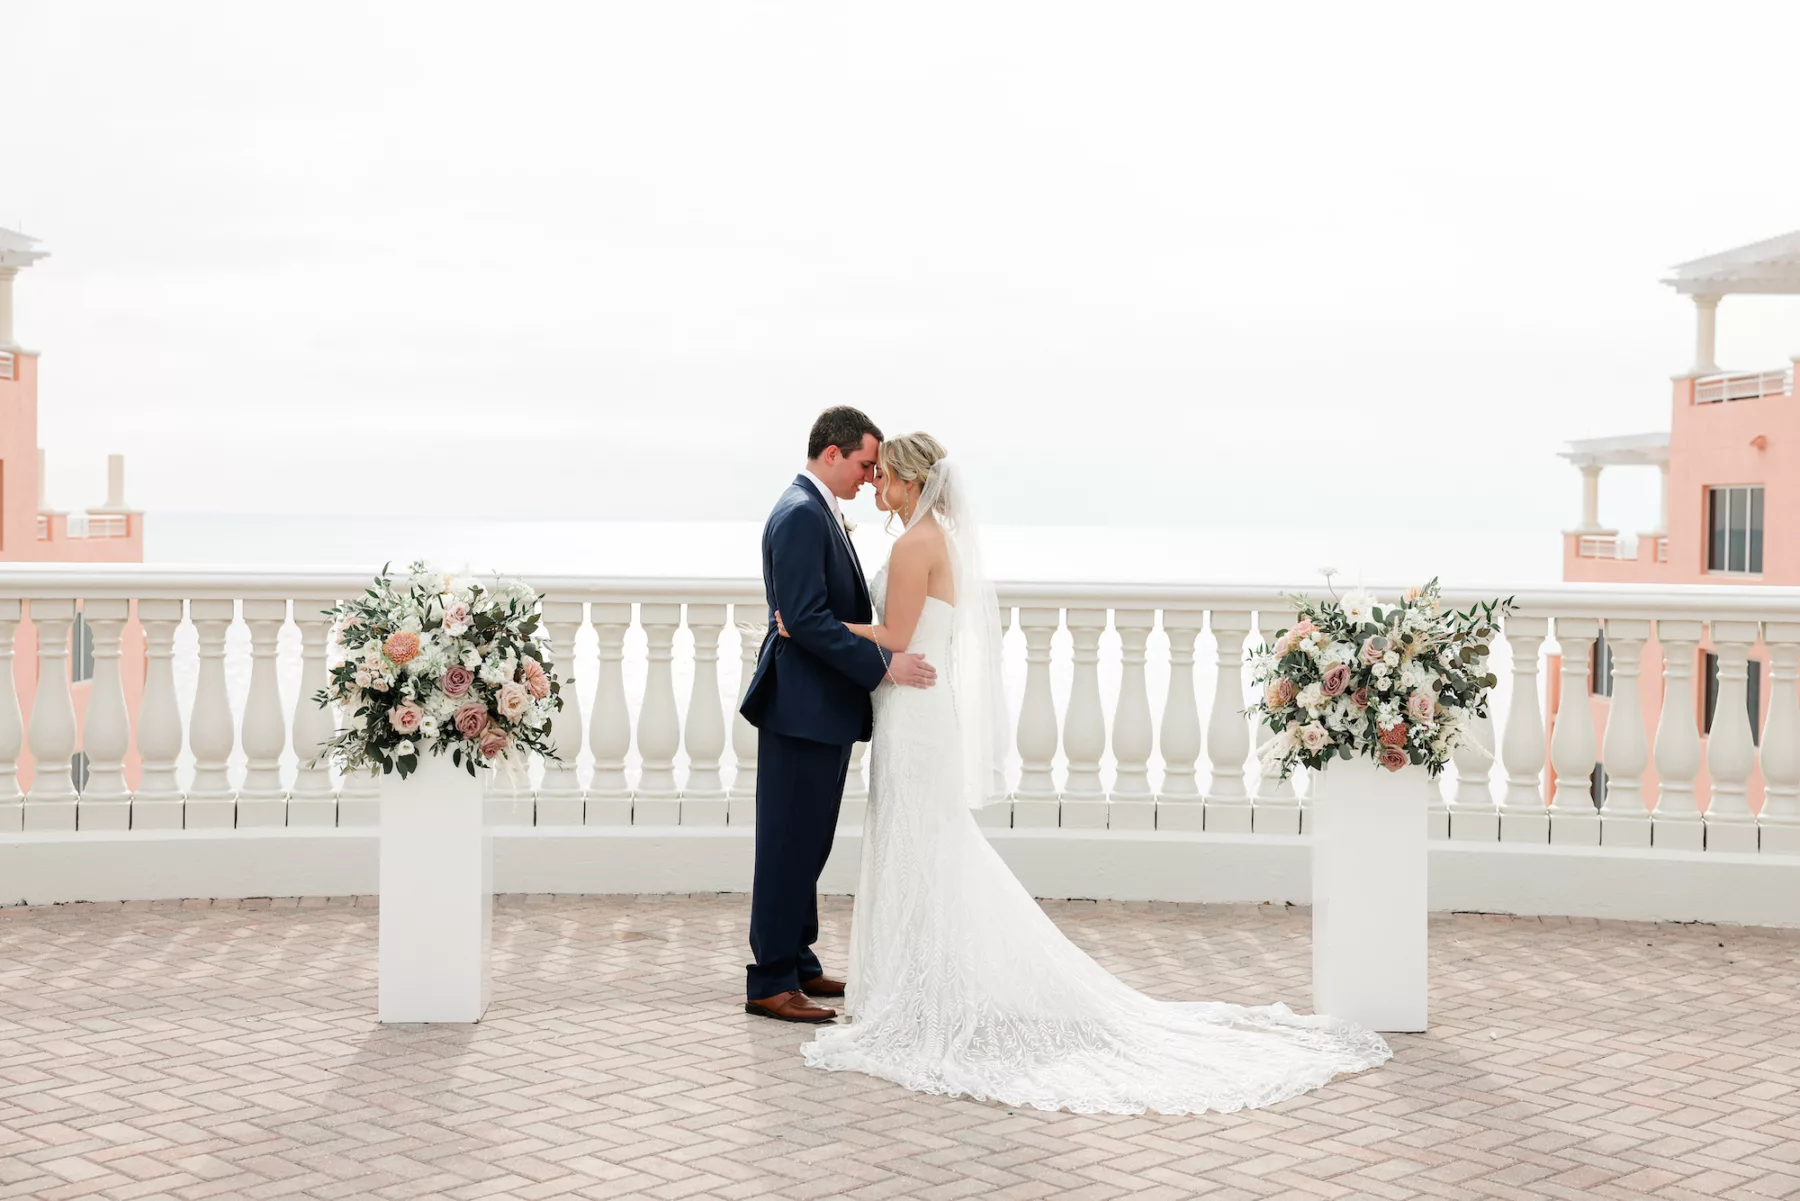 Bride and Groom Just Married Sky Terrace Wedding Portrait | Tampa Bay Photographer Lifelong Photography Studio | Venue Hyatt Regency Clearwater Beach